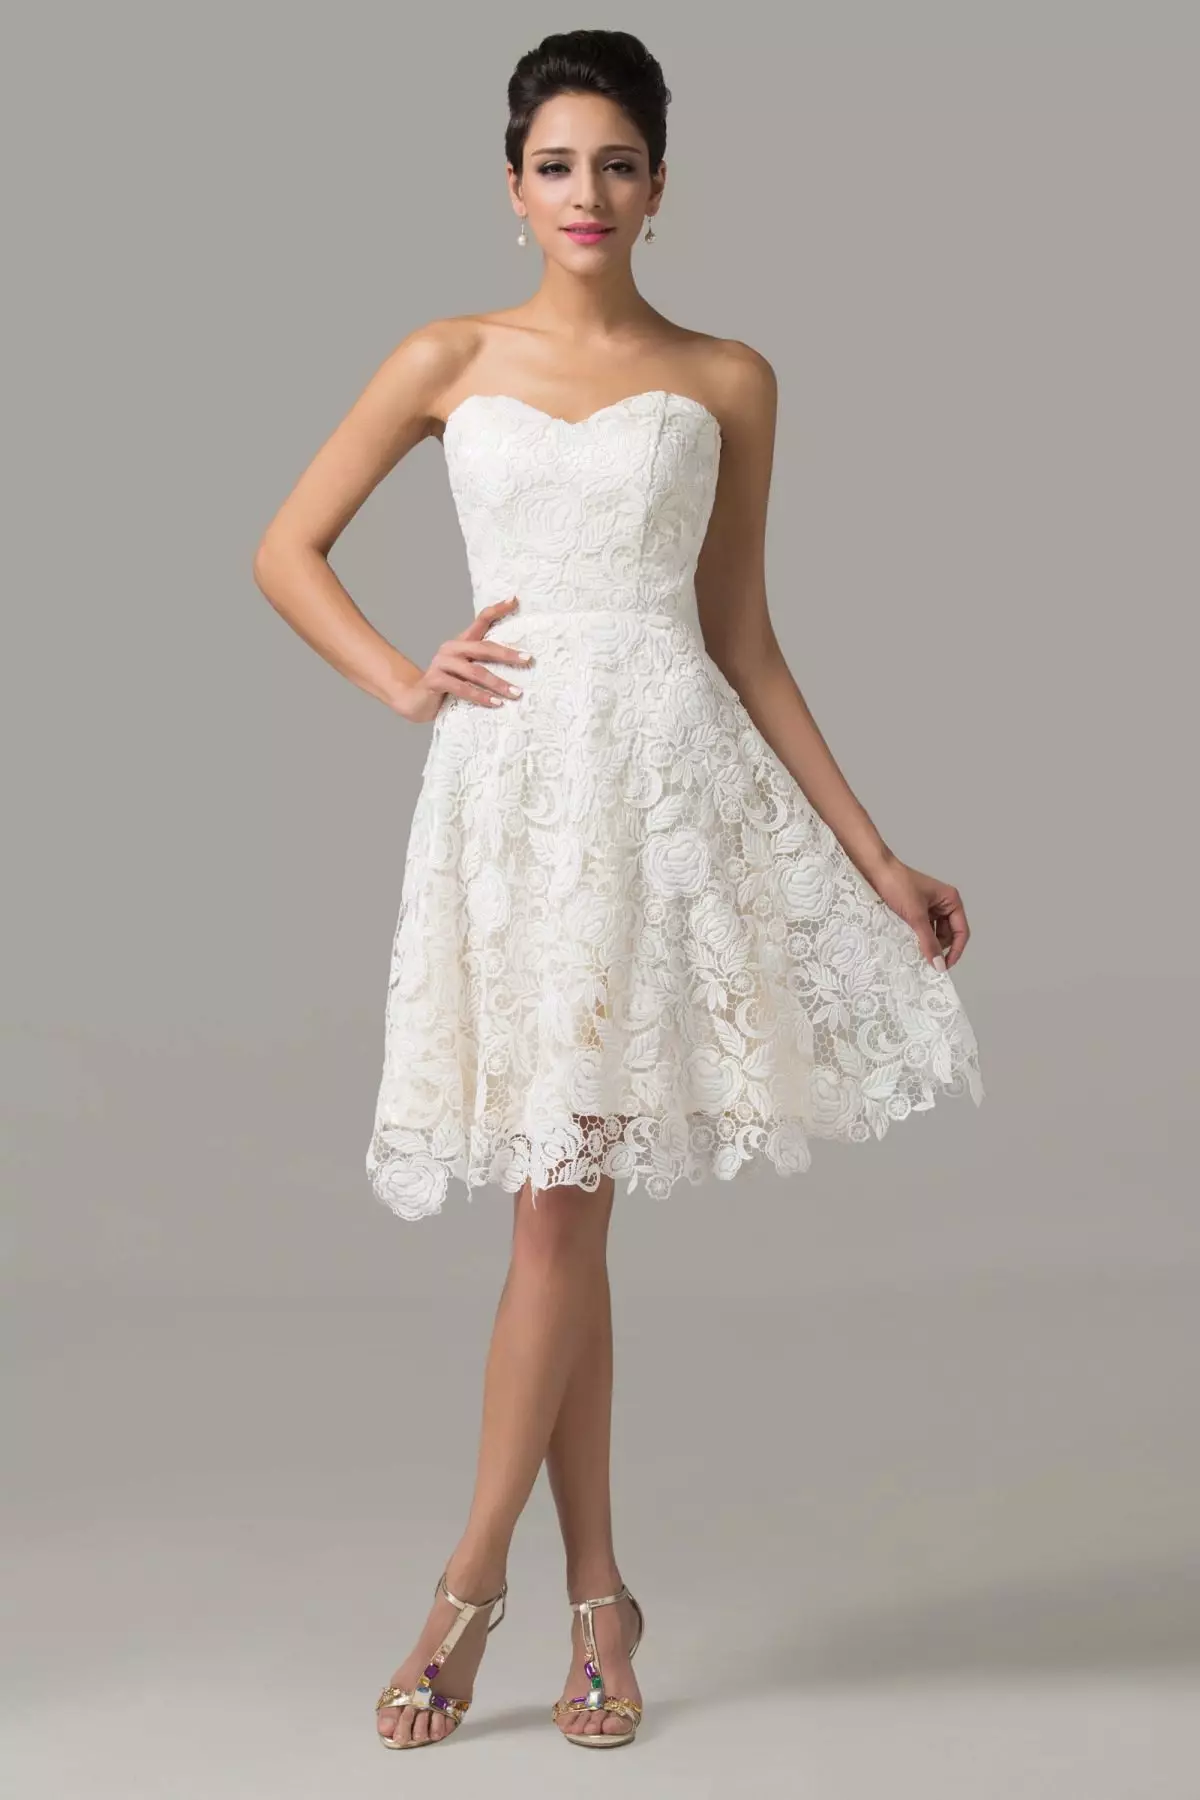 Gaun pengantin murah yang murah